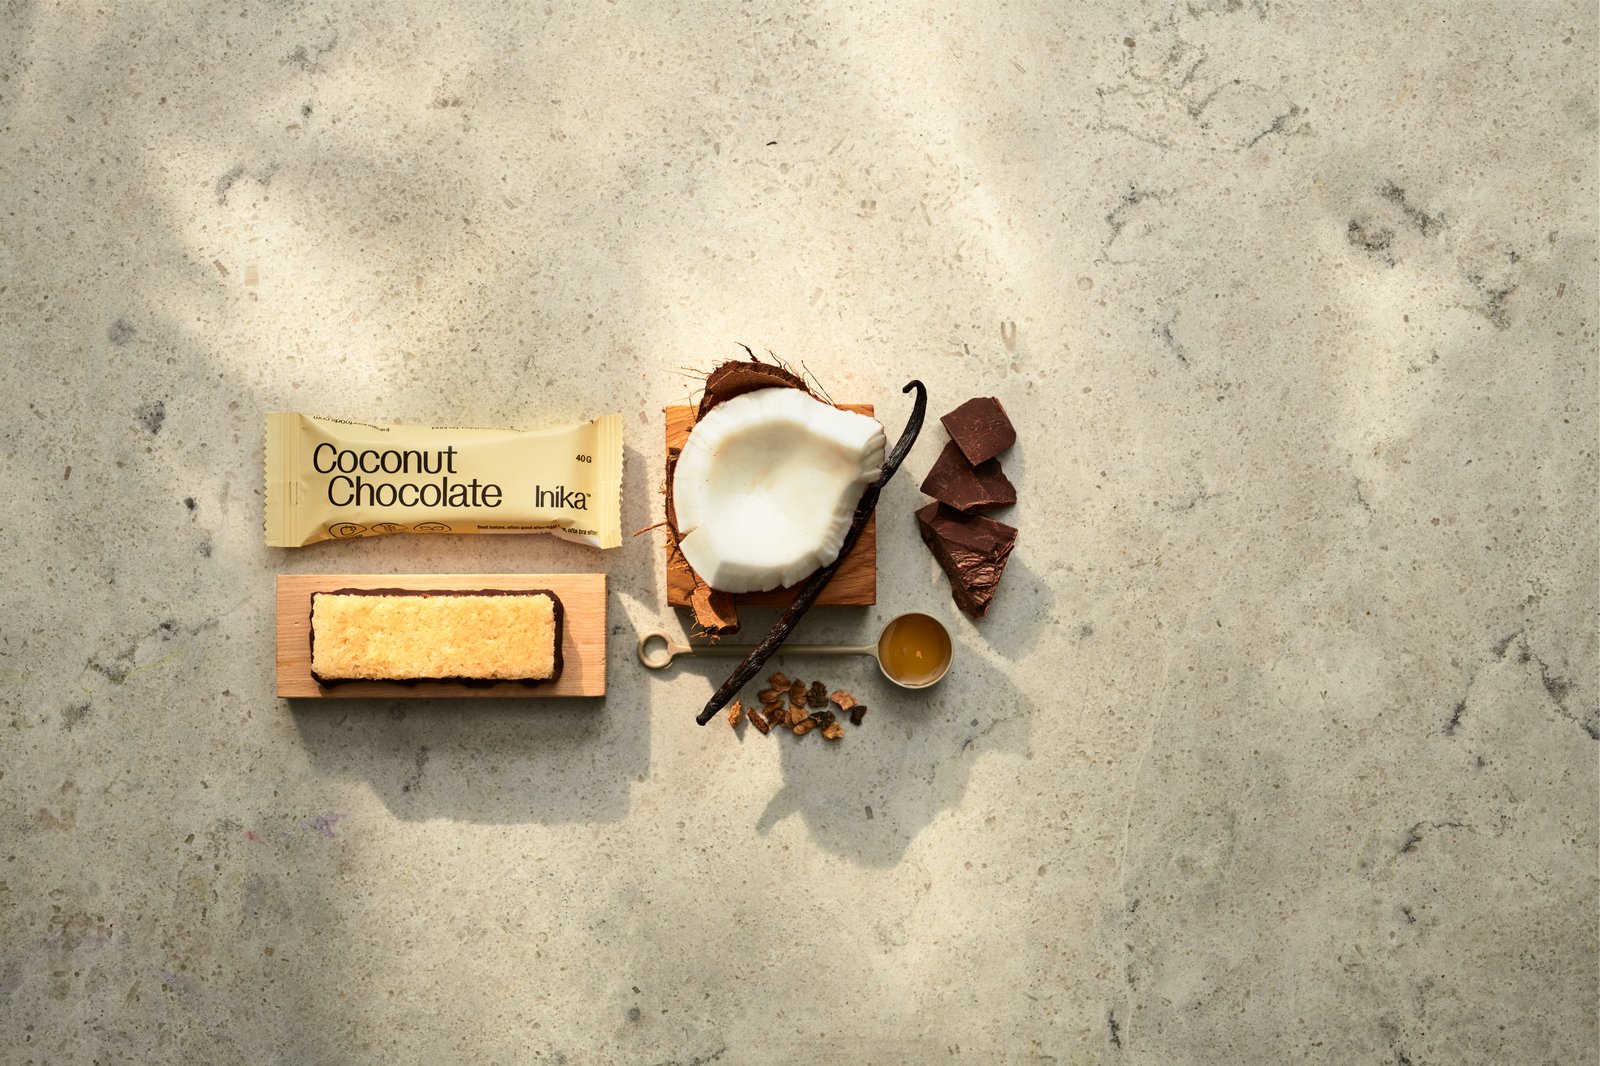 Inika Superfoods Coconut Chocolate Bar 40g